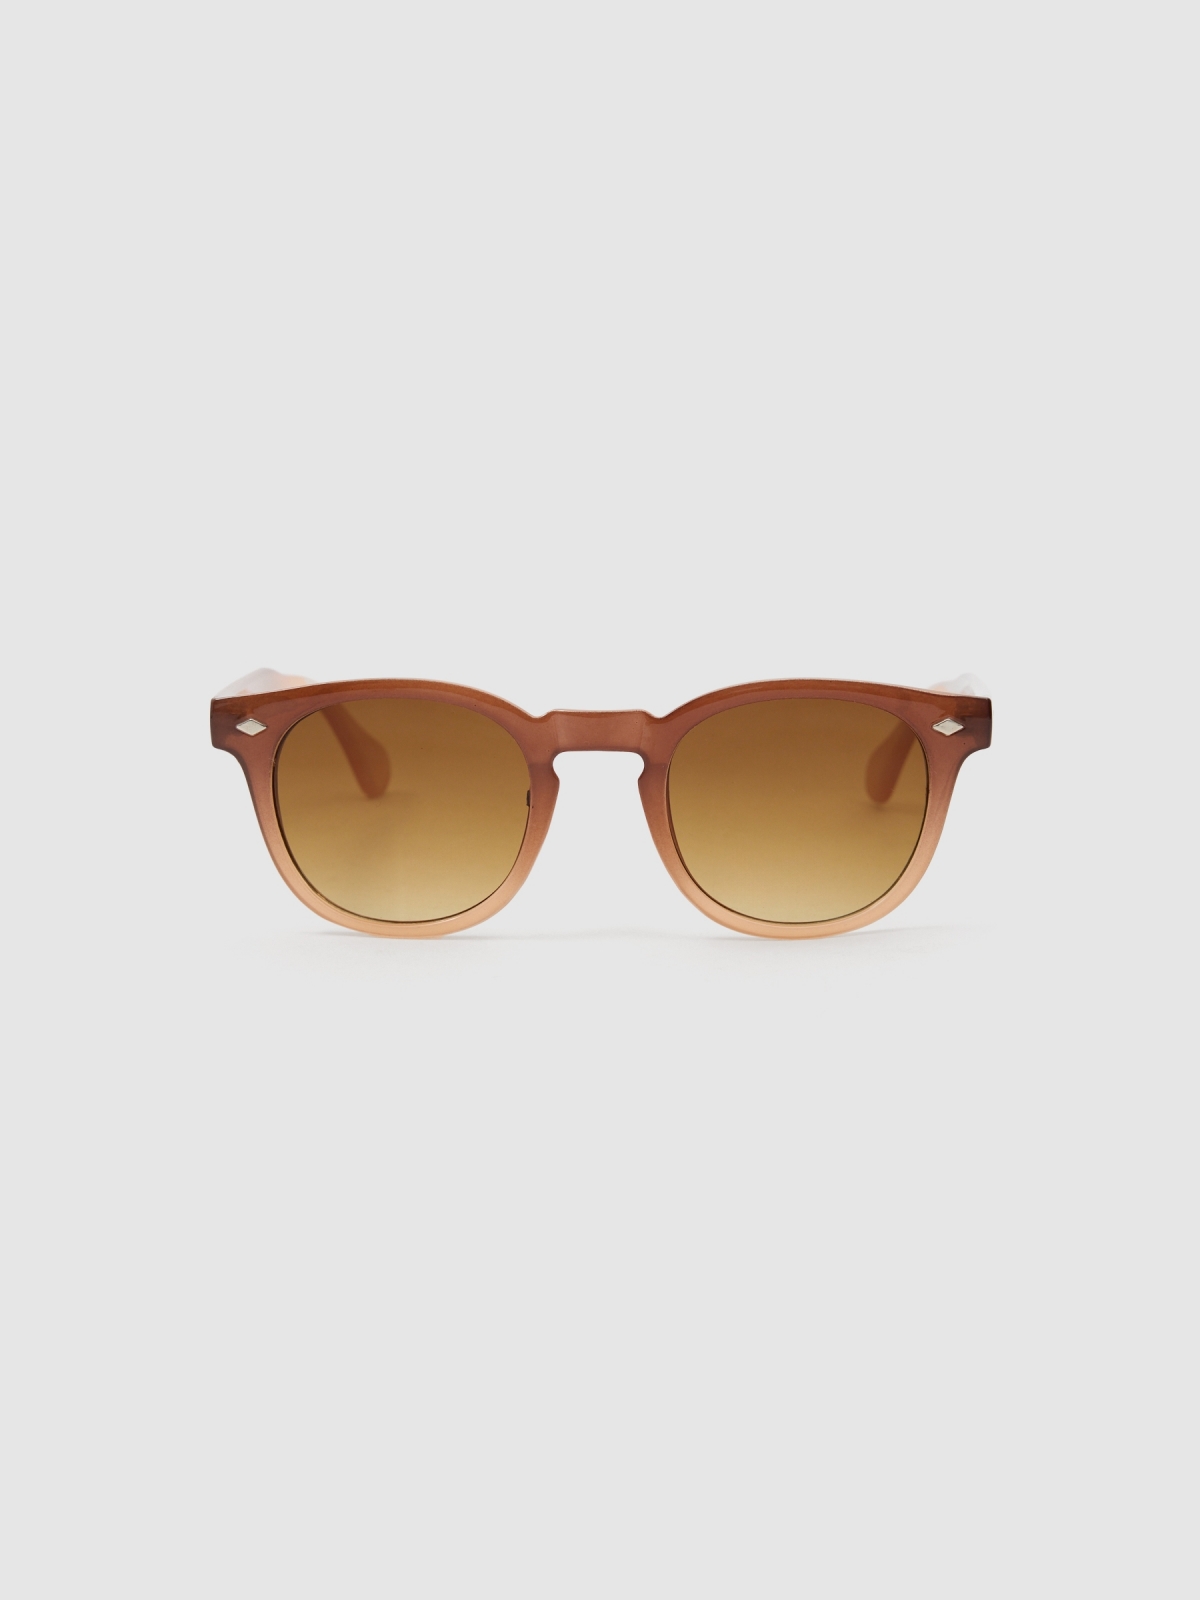 Gradient sunglasses brown